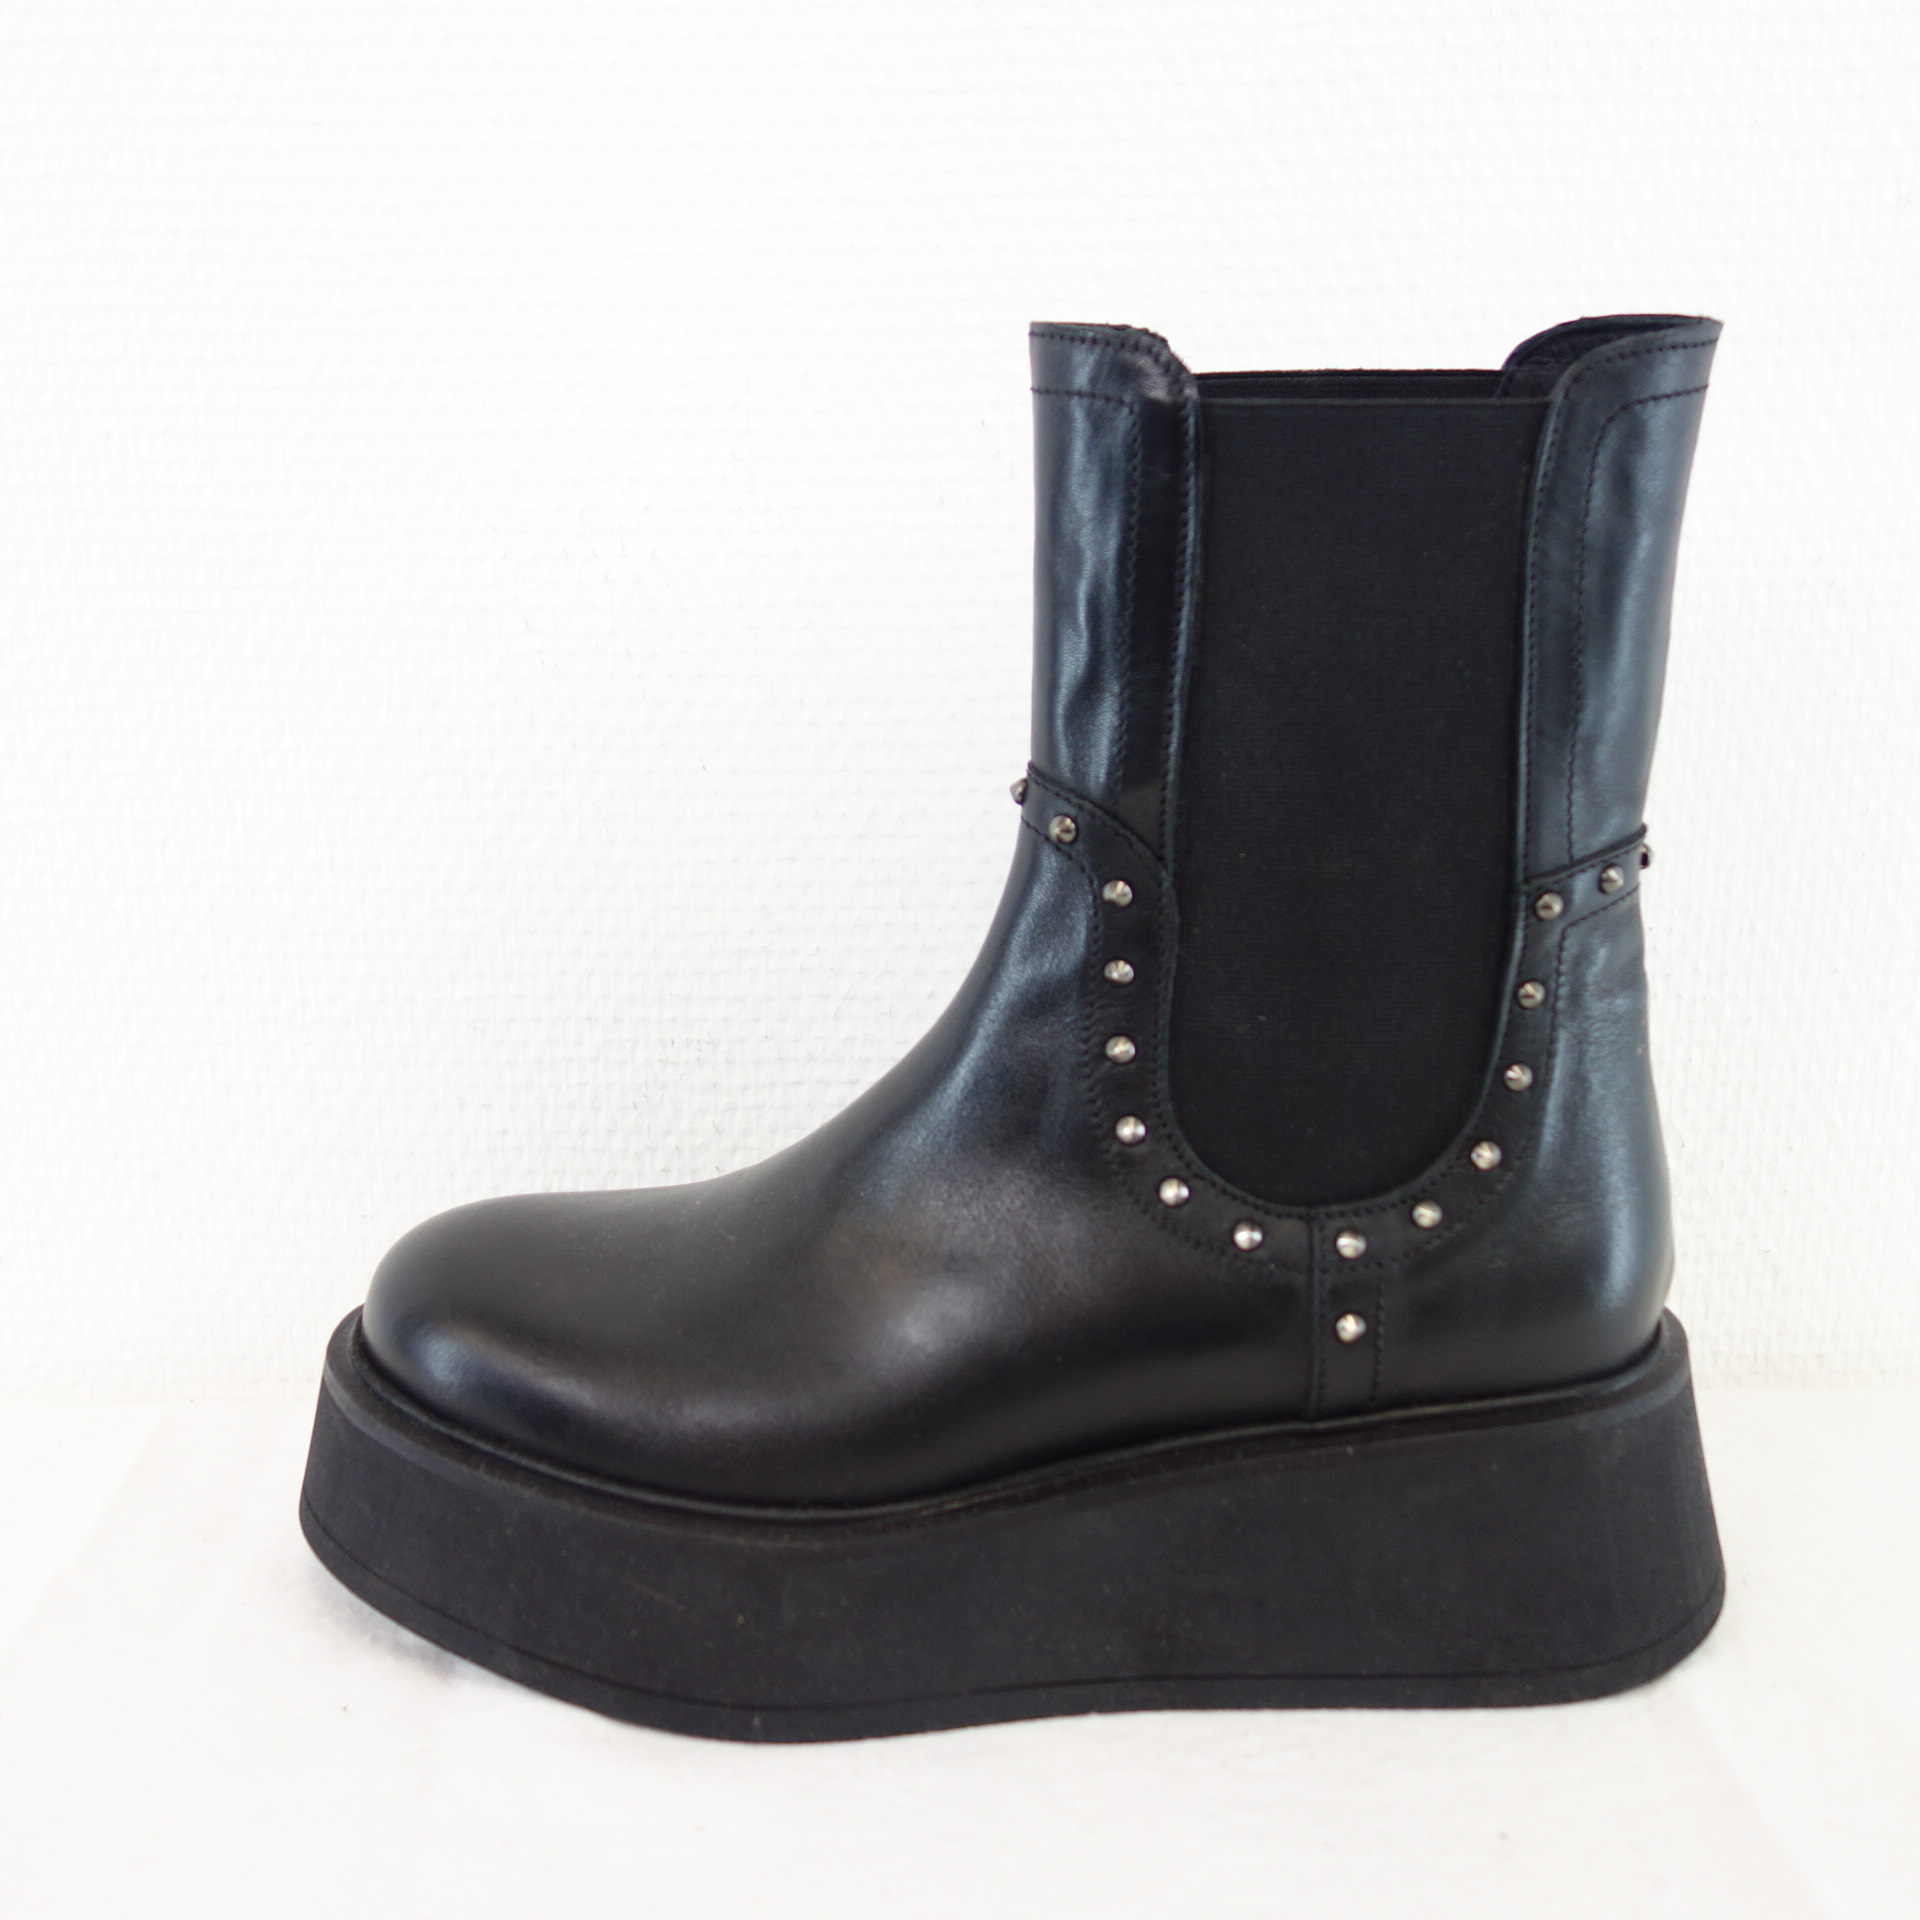 BUKELA Damen Schuhe Chelsea Boots Stiefeletten Stiefel Schwarz Leder Gr 37